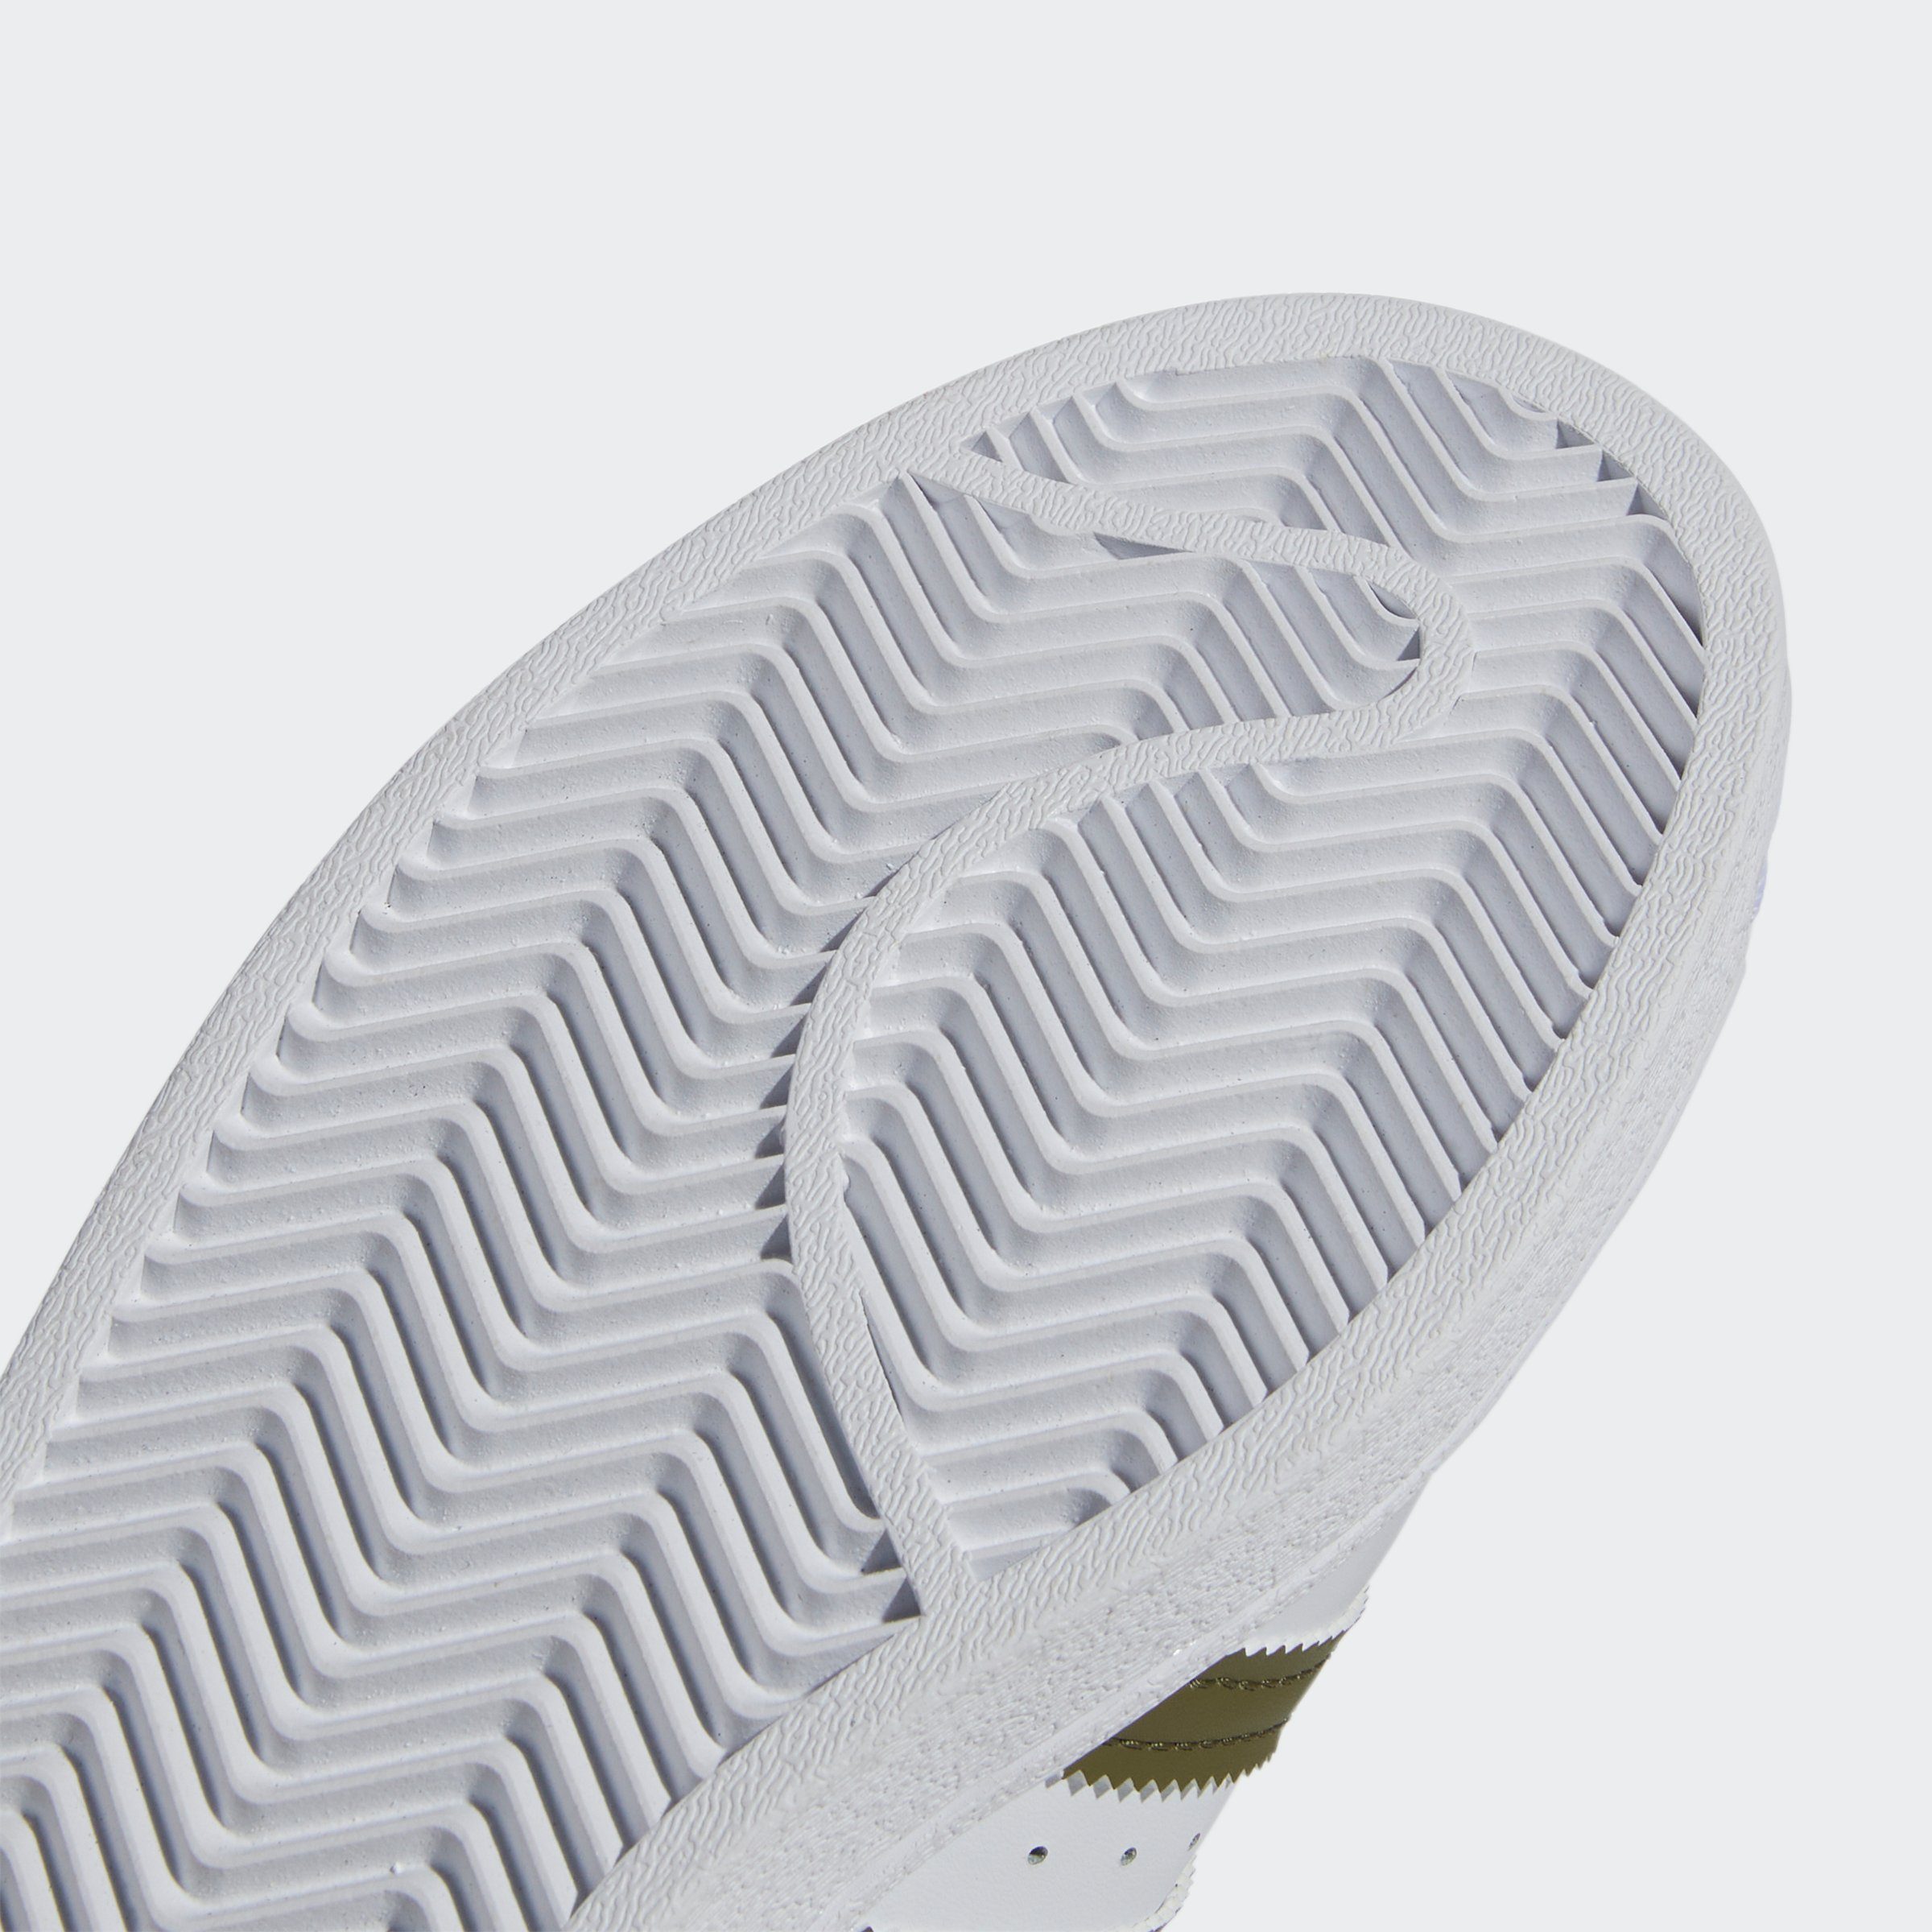 Originals SUPERSTAR Sneaker weiß adidas